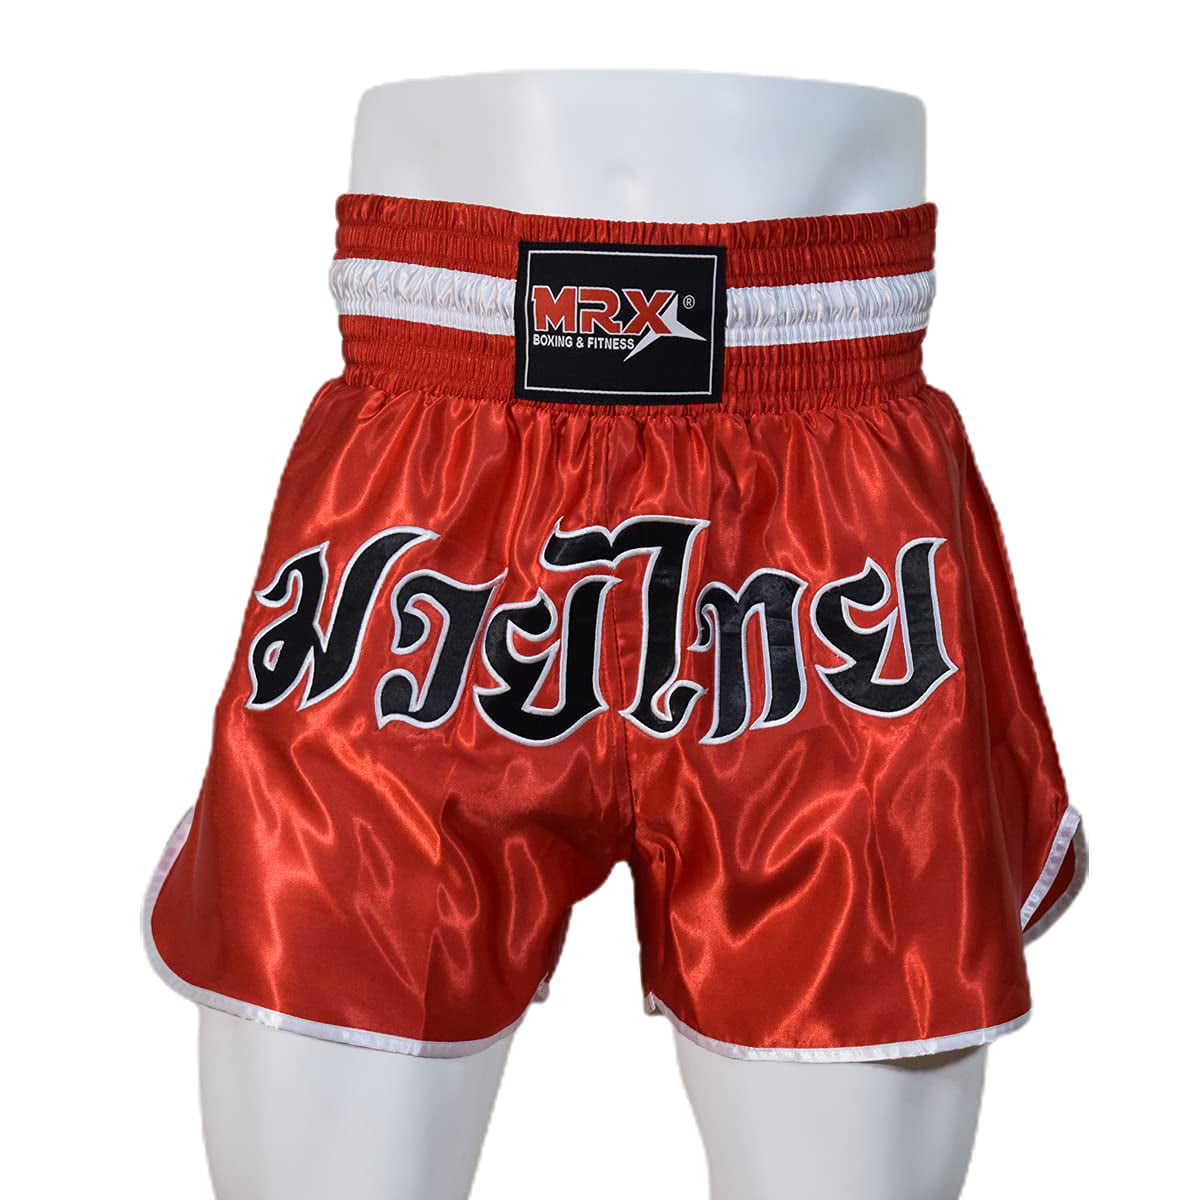 Farabi Pro Boxing Shorts for Boxing Training Punching Sparring Fitness Gym Clothing Fairtex jiu jitsu MMA Muay Thai Kickboxing Equipment Trunks 